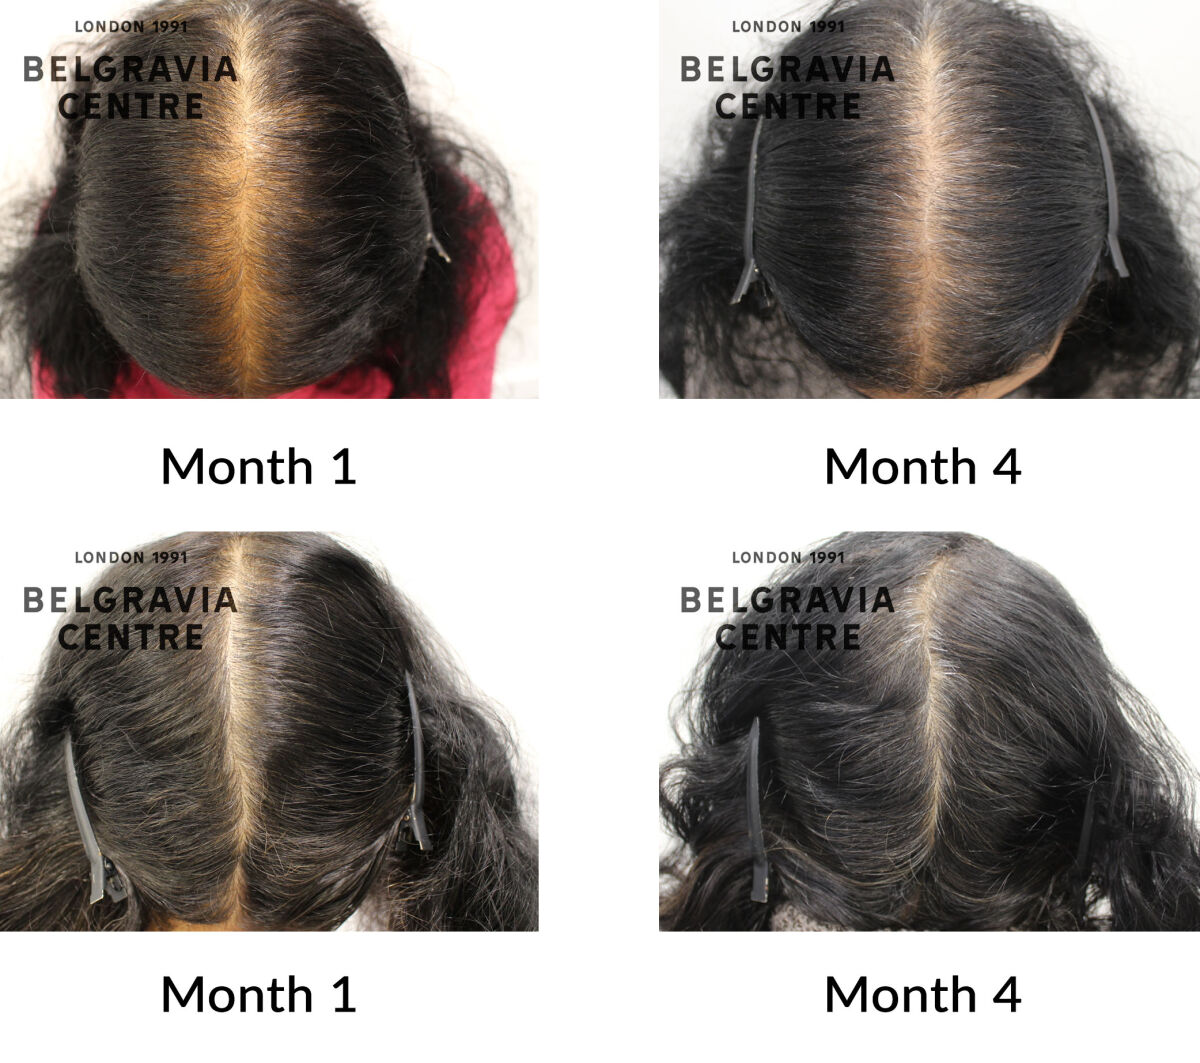 female pattern hair loss the belgravia centre 447857